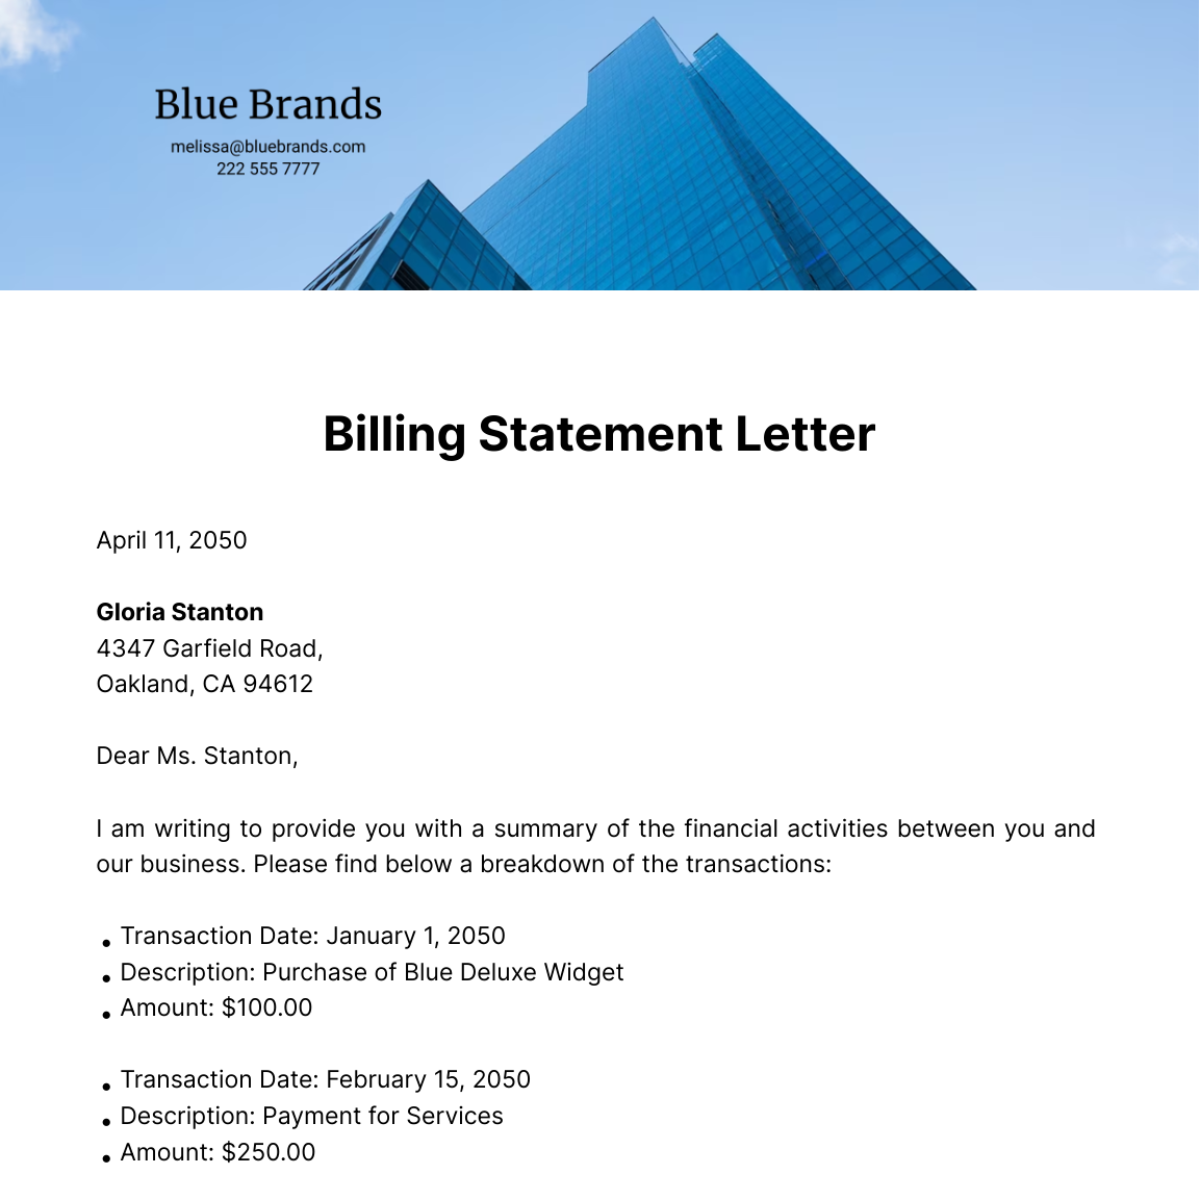 Billing Statement Letter Template